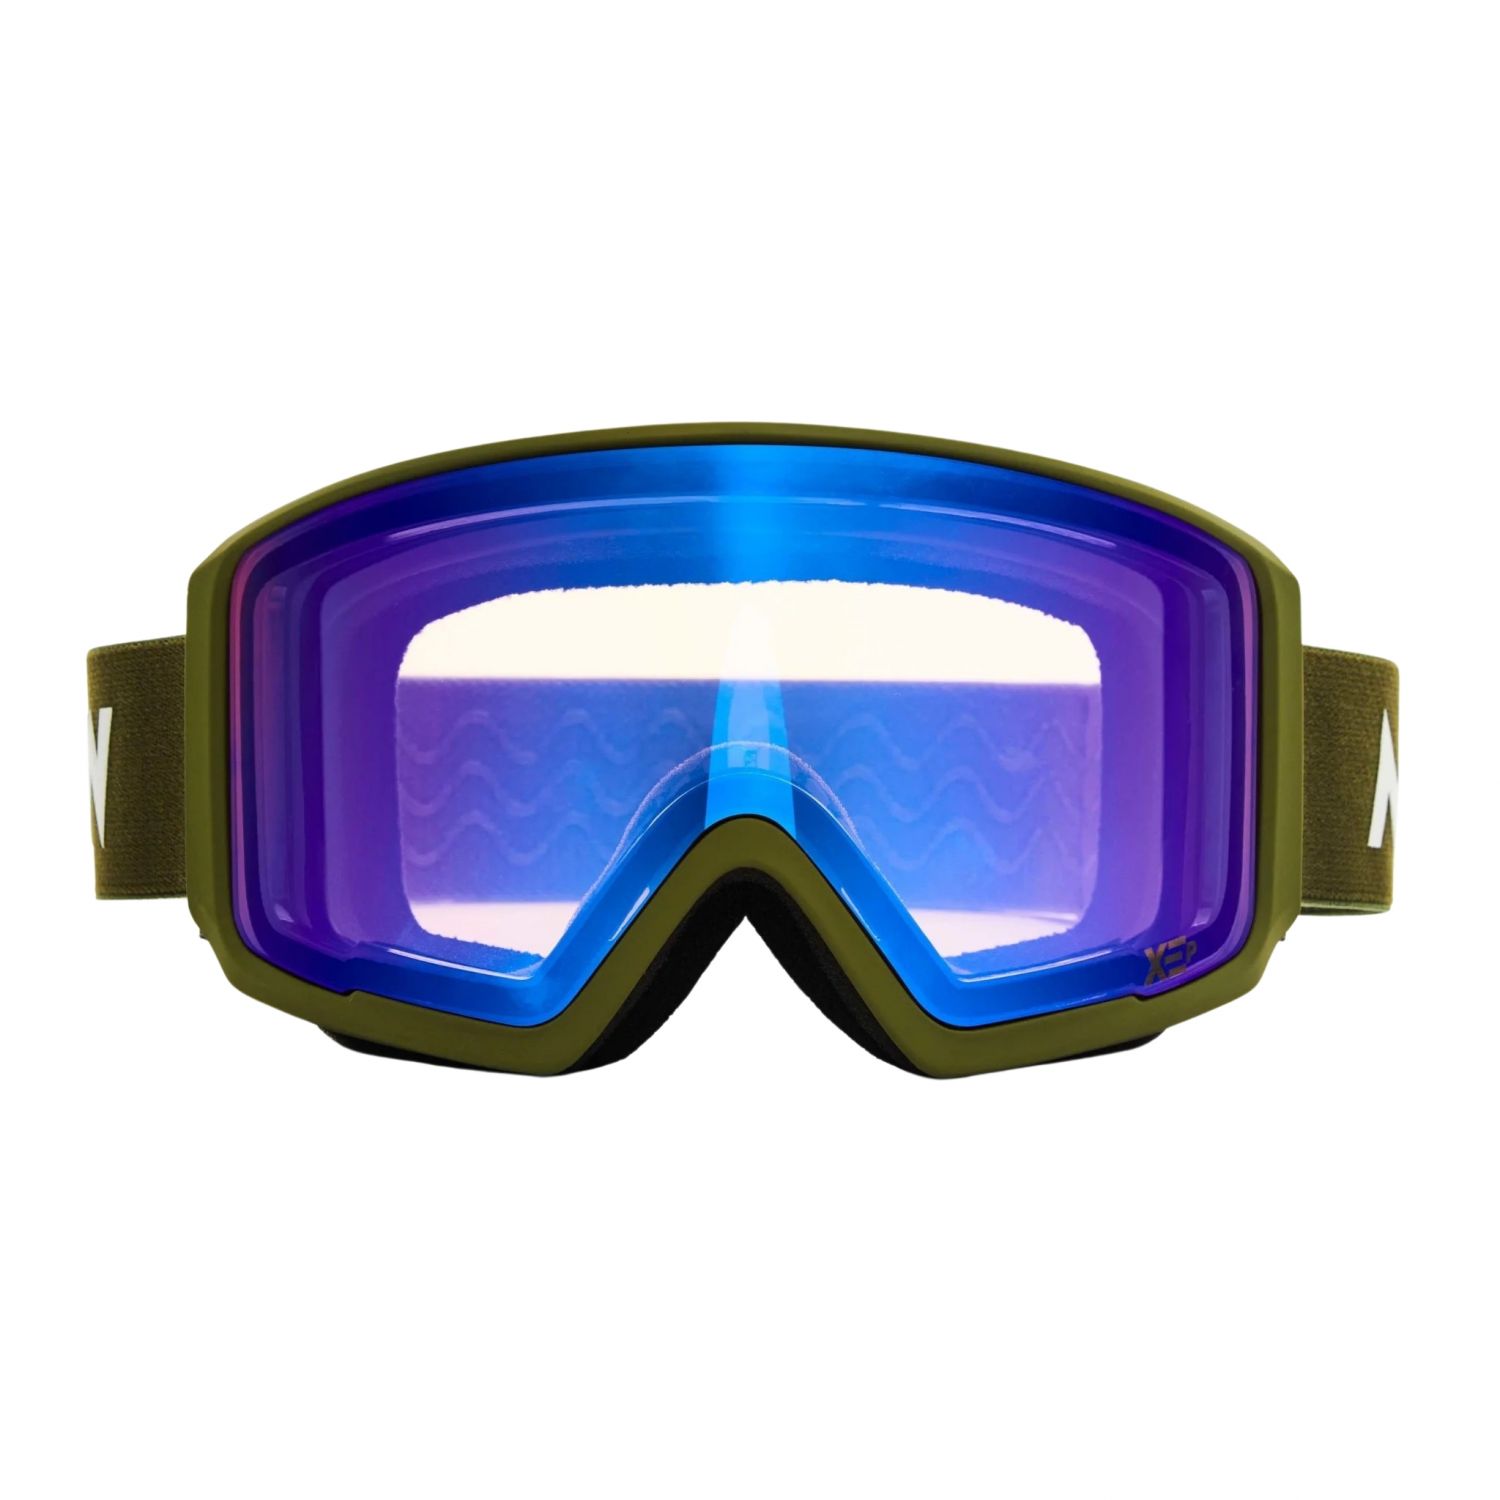 MessyWeekend Flip XEp, masque de ski, vert